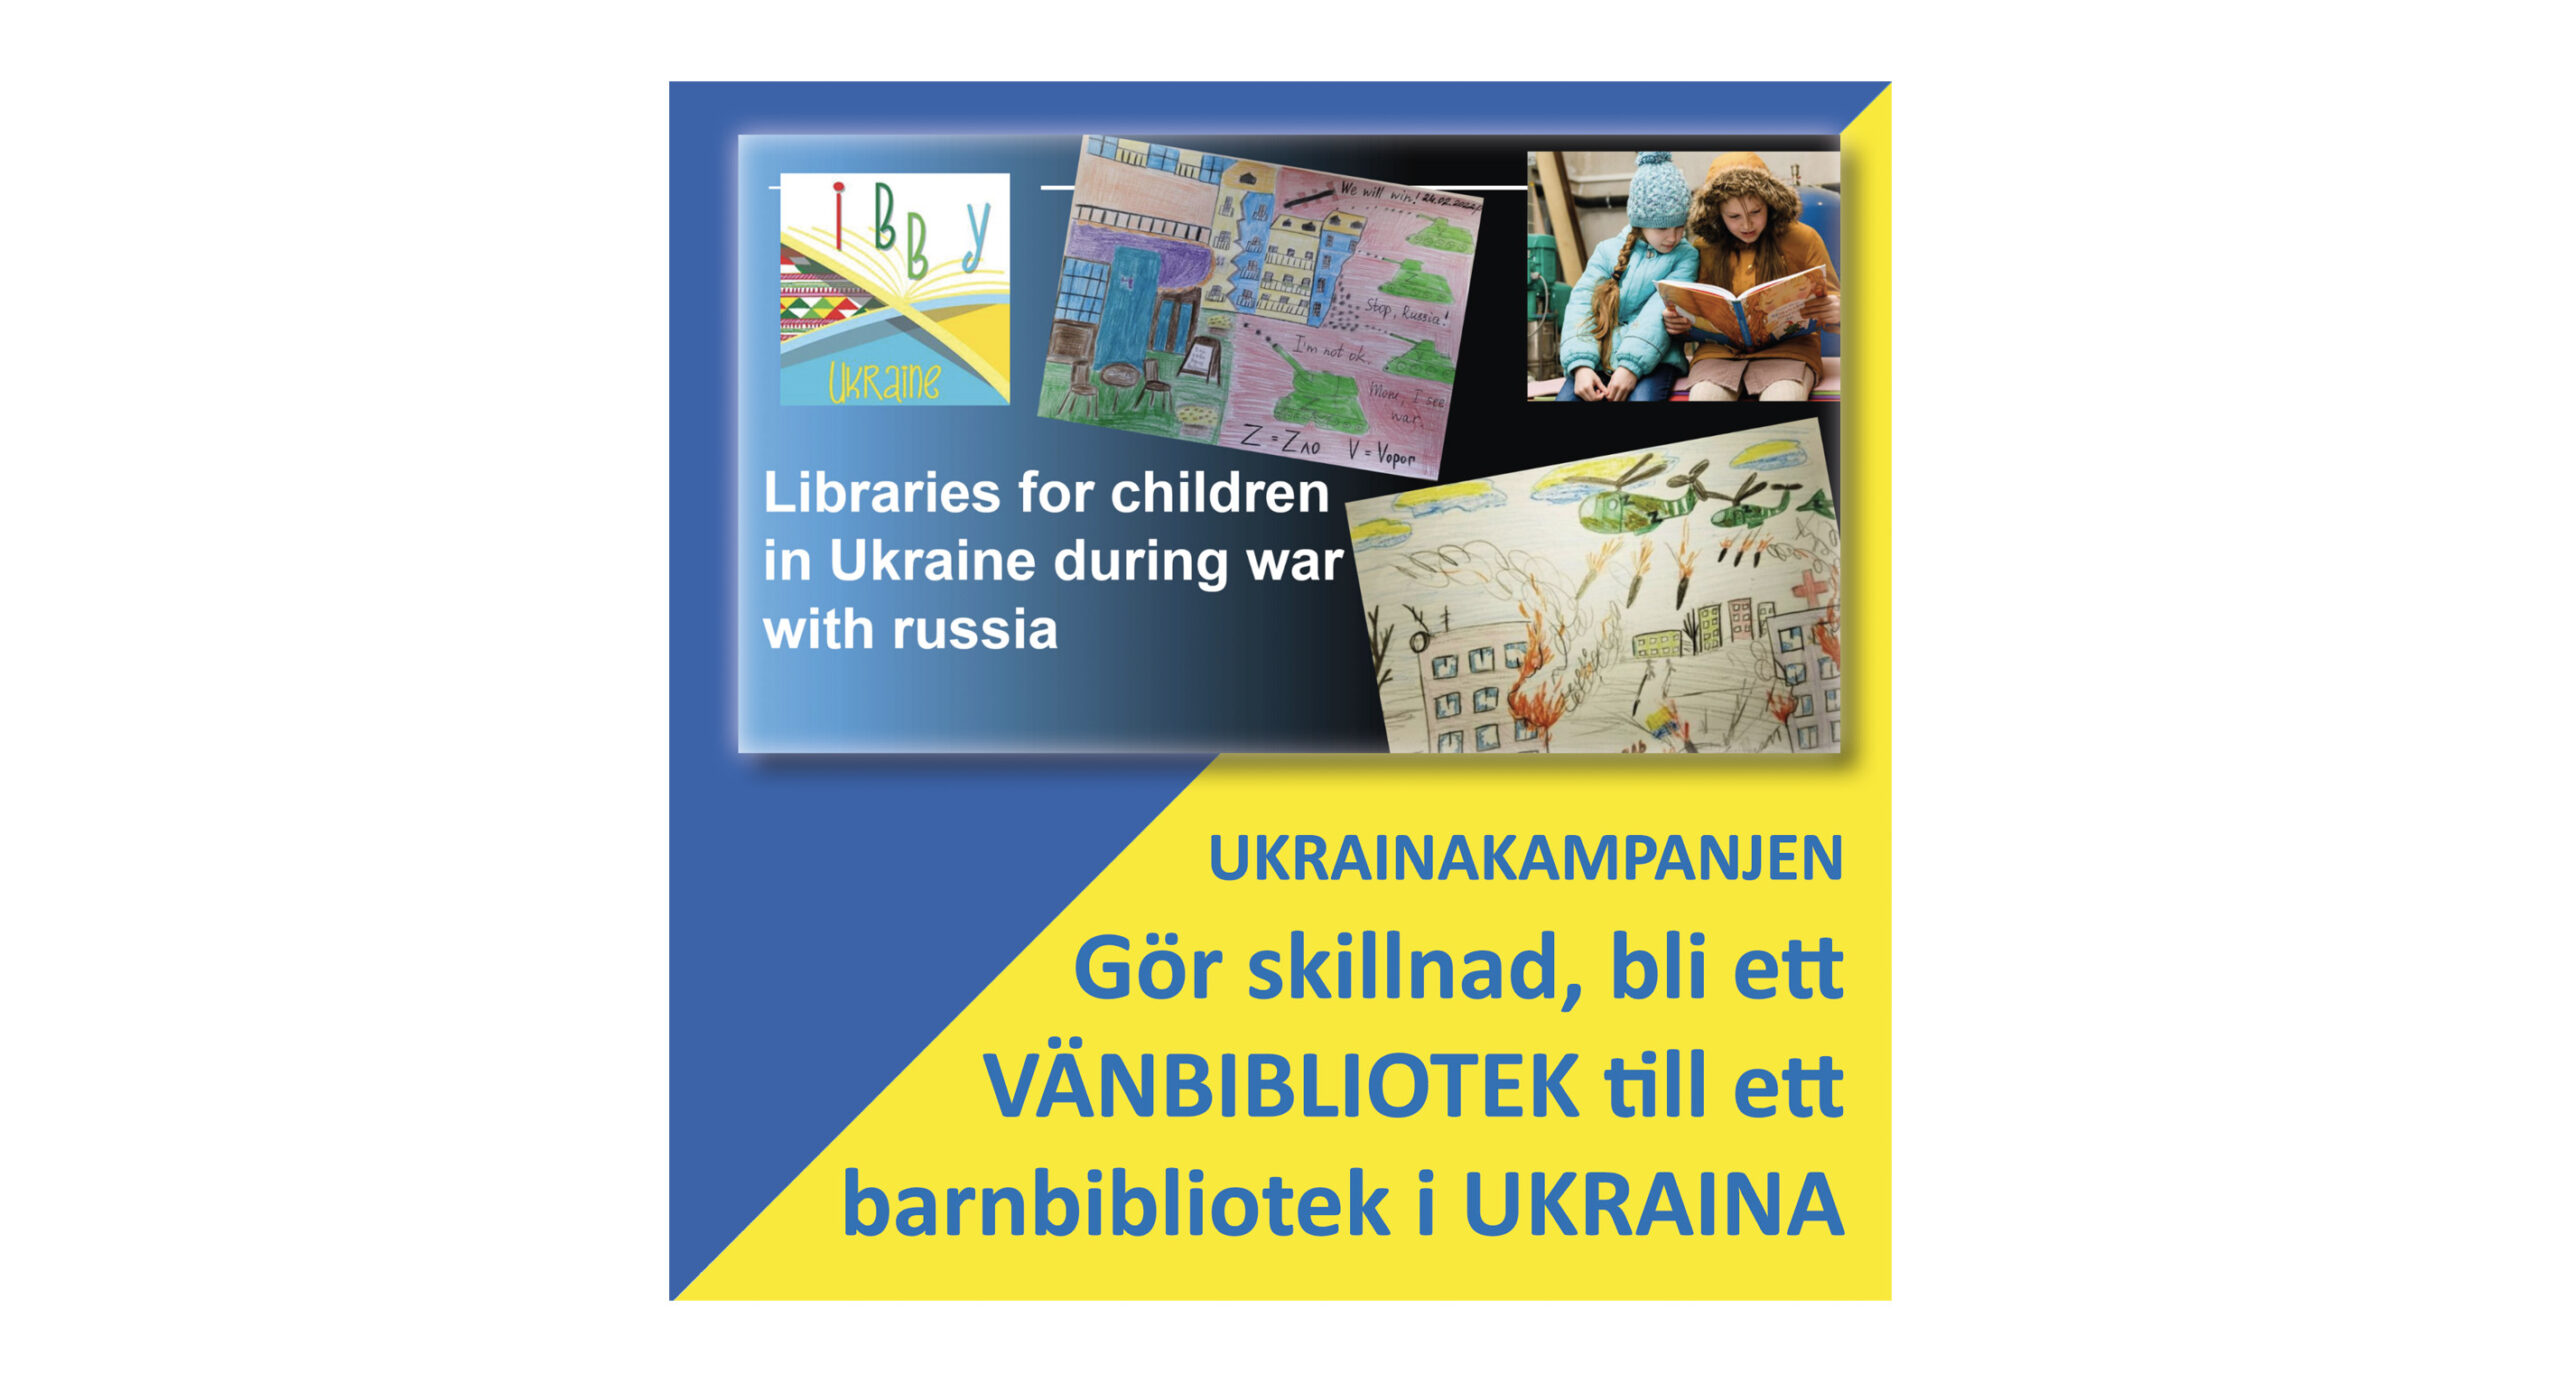 APRILKAMPANJ – Vänbibliotek i Ukraina